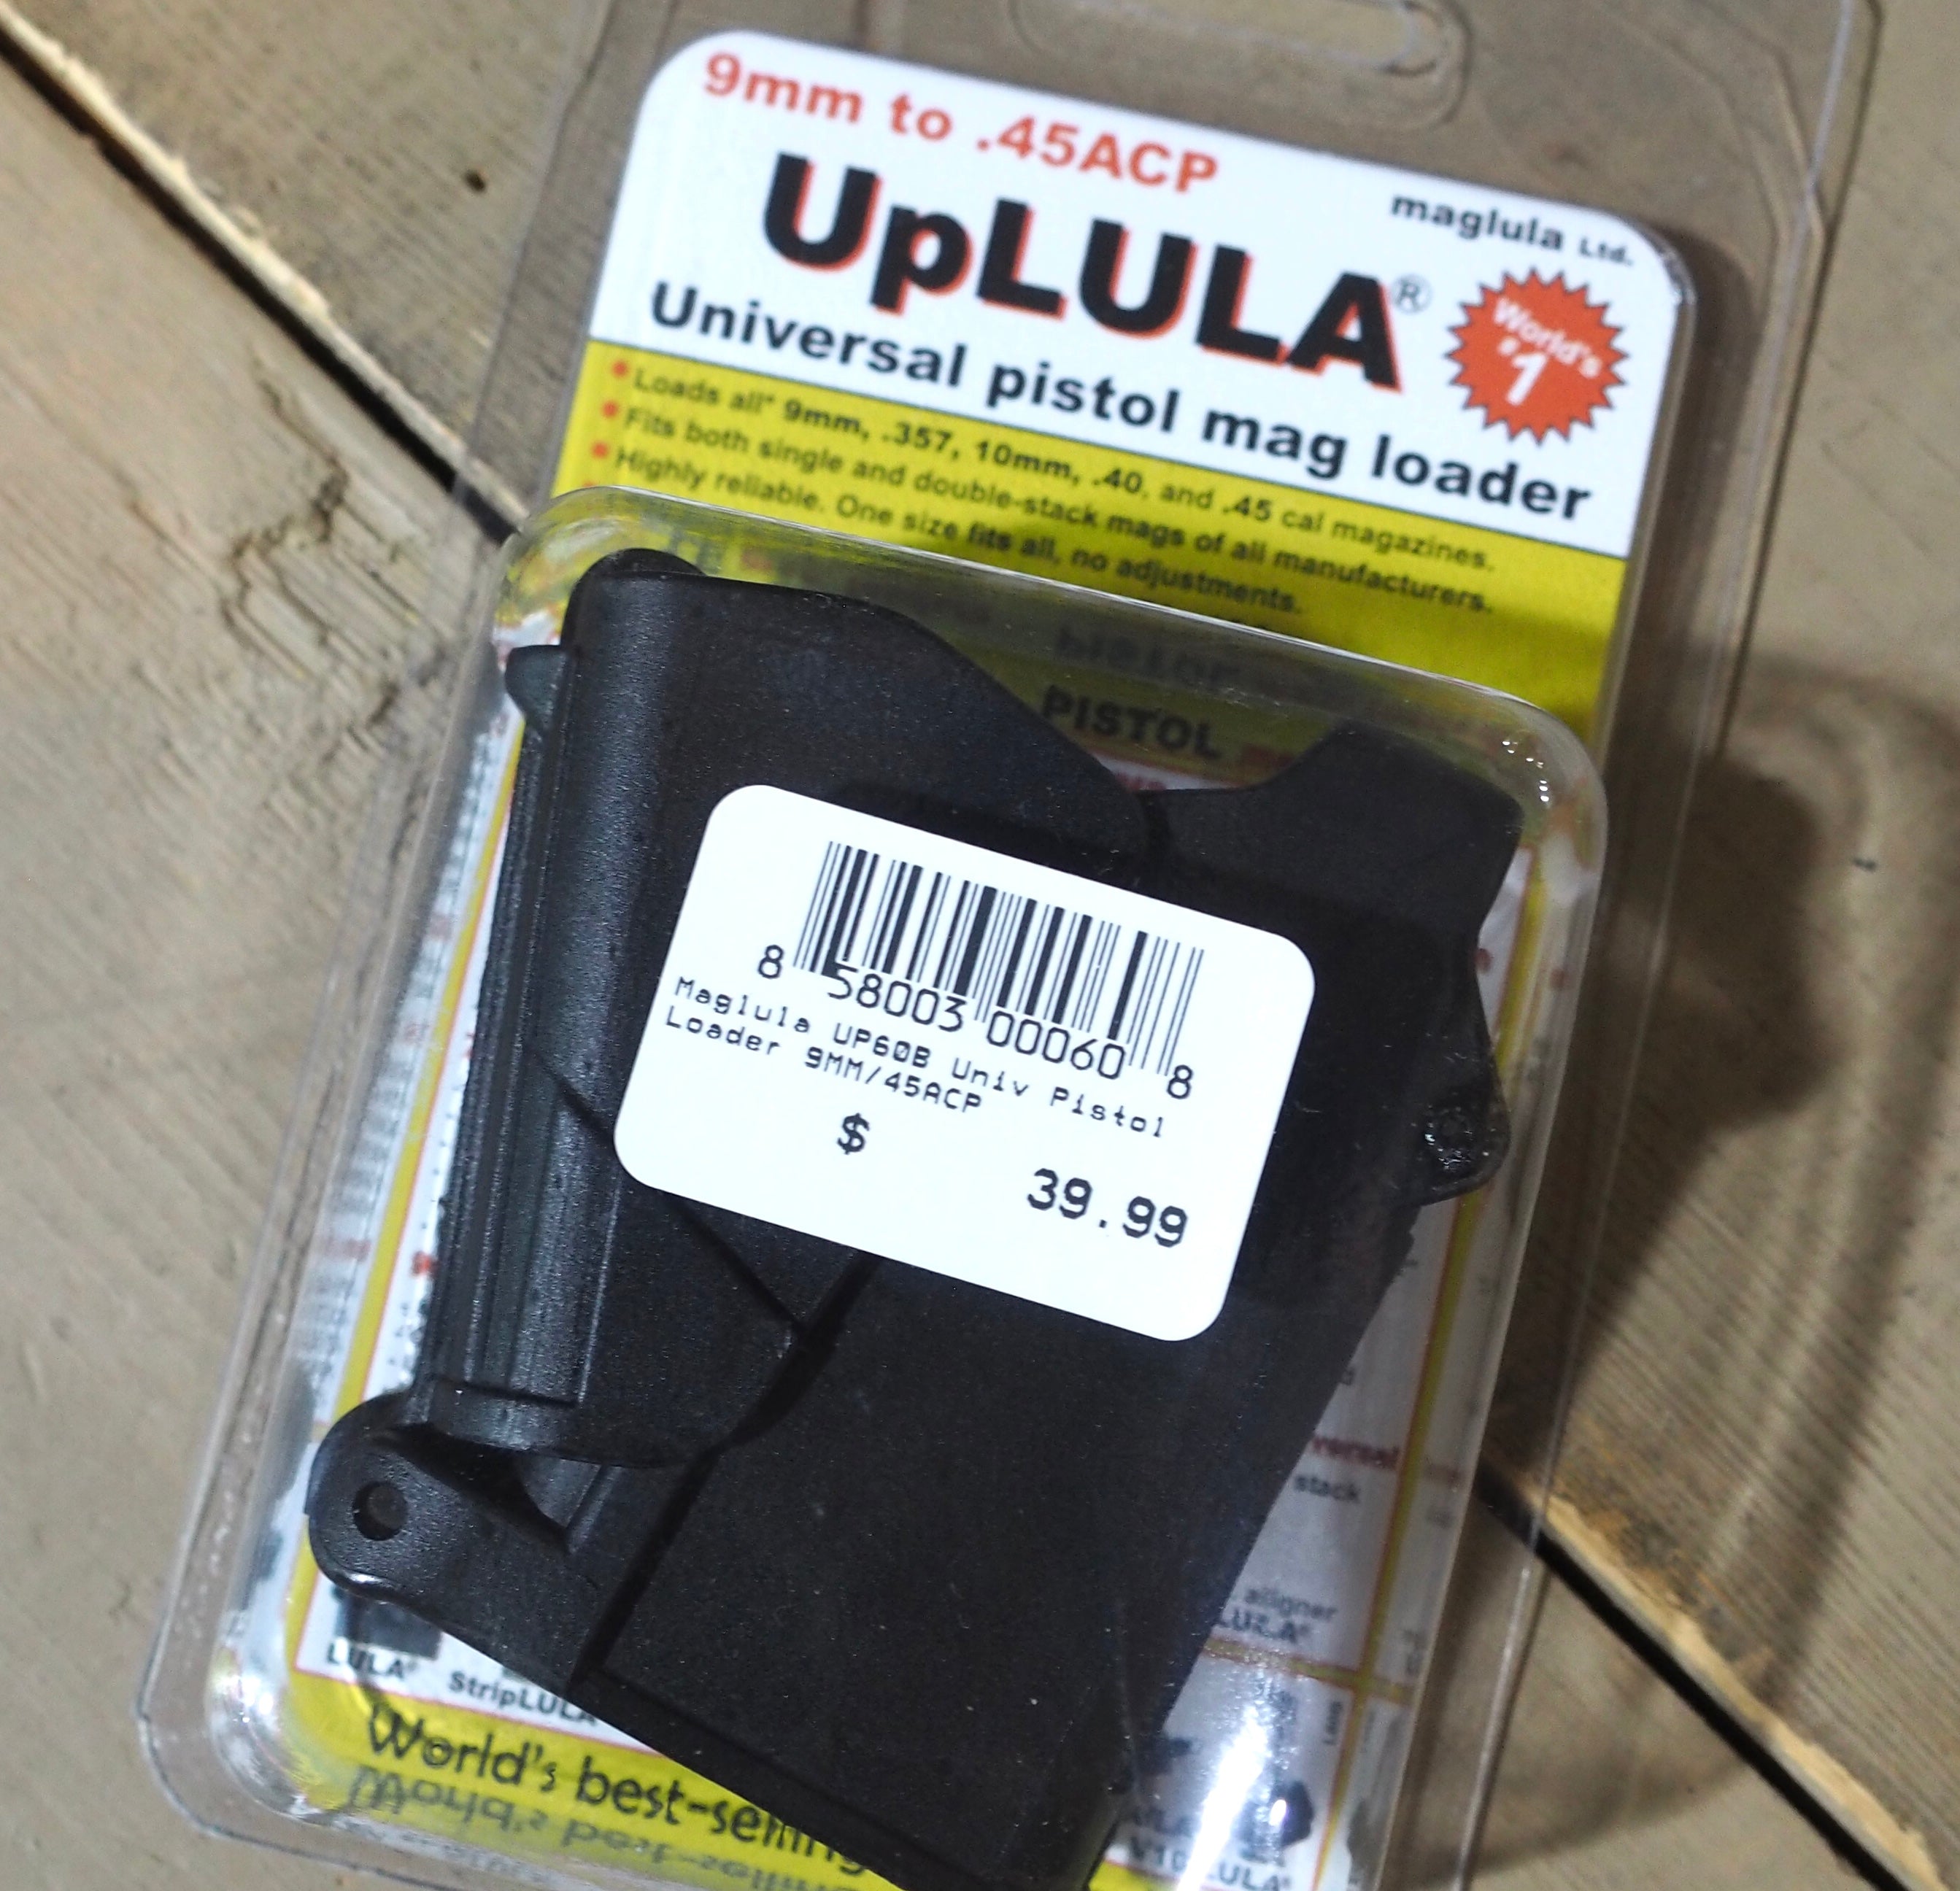 UpLULA Universal Pistol Magazine Loader